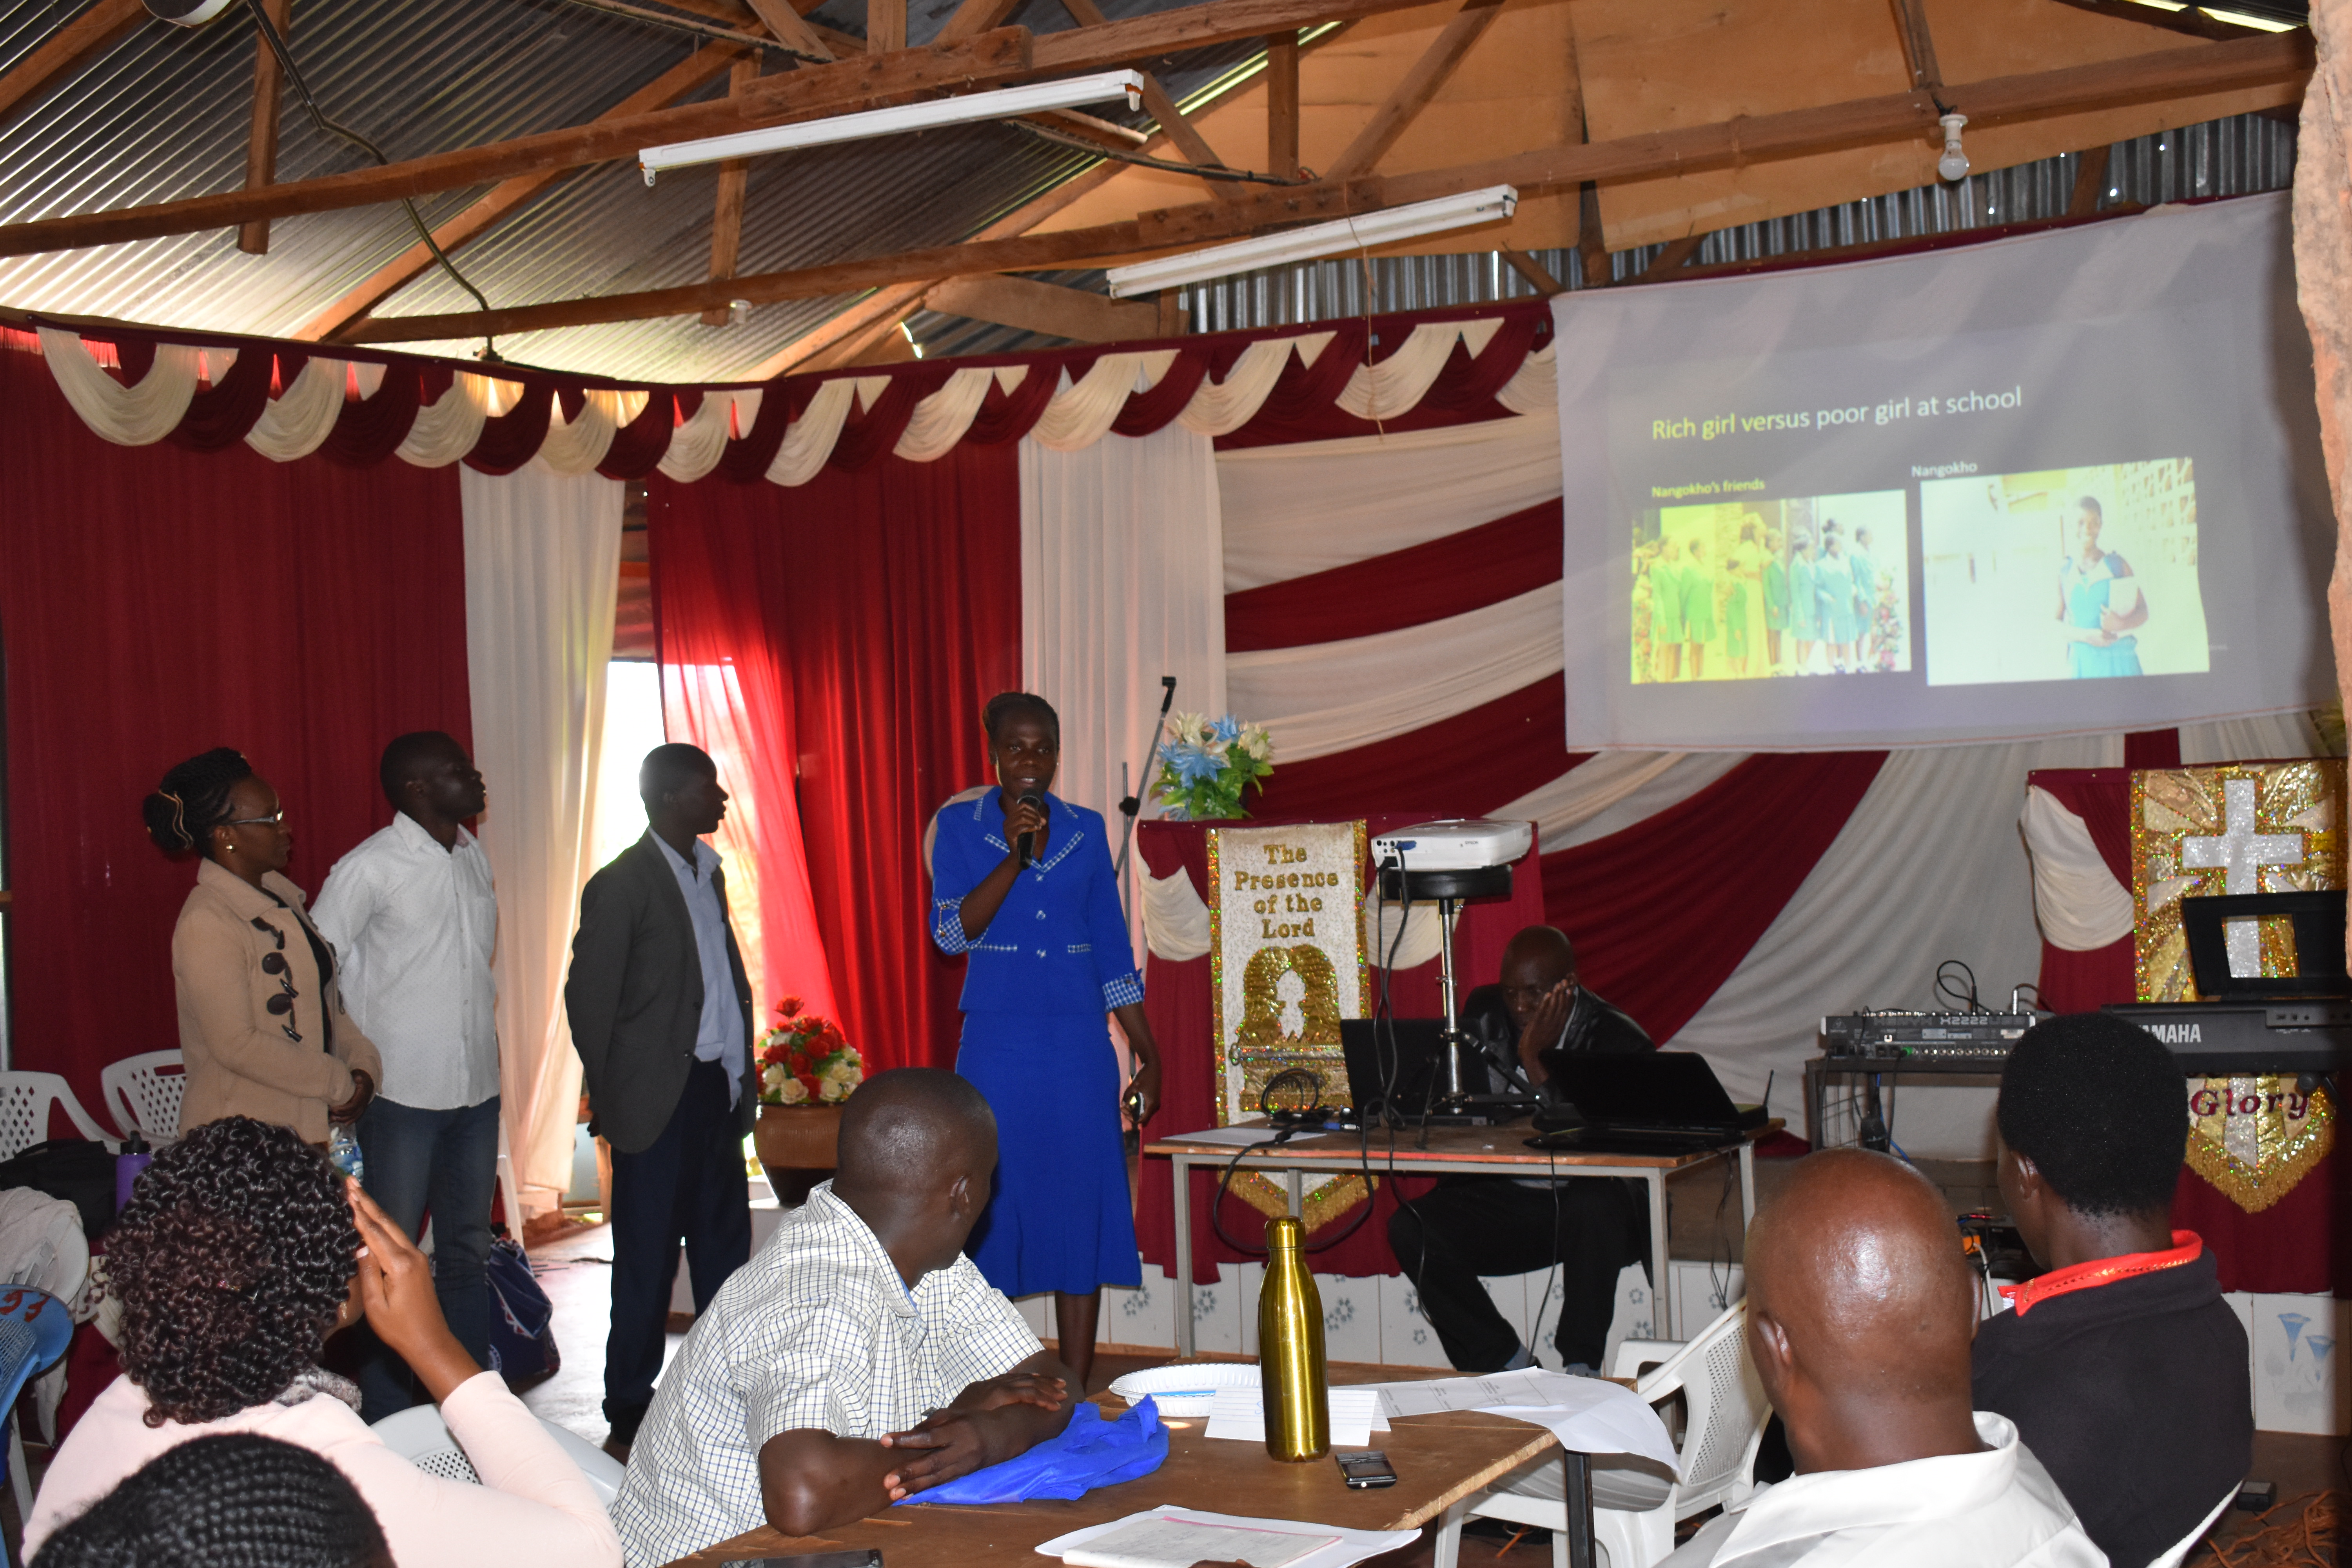 Teachers in Kenya present their digital stories during a professional development workshop